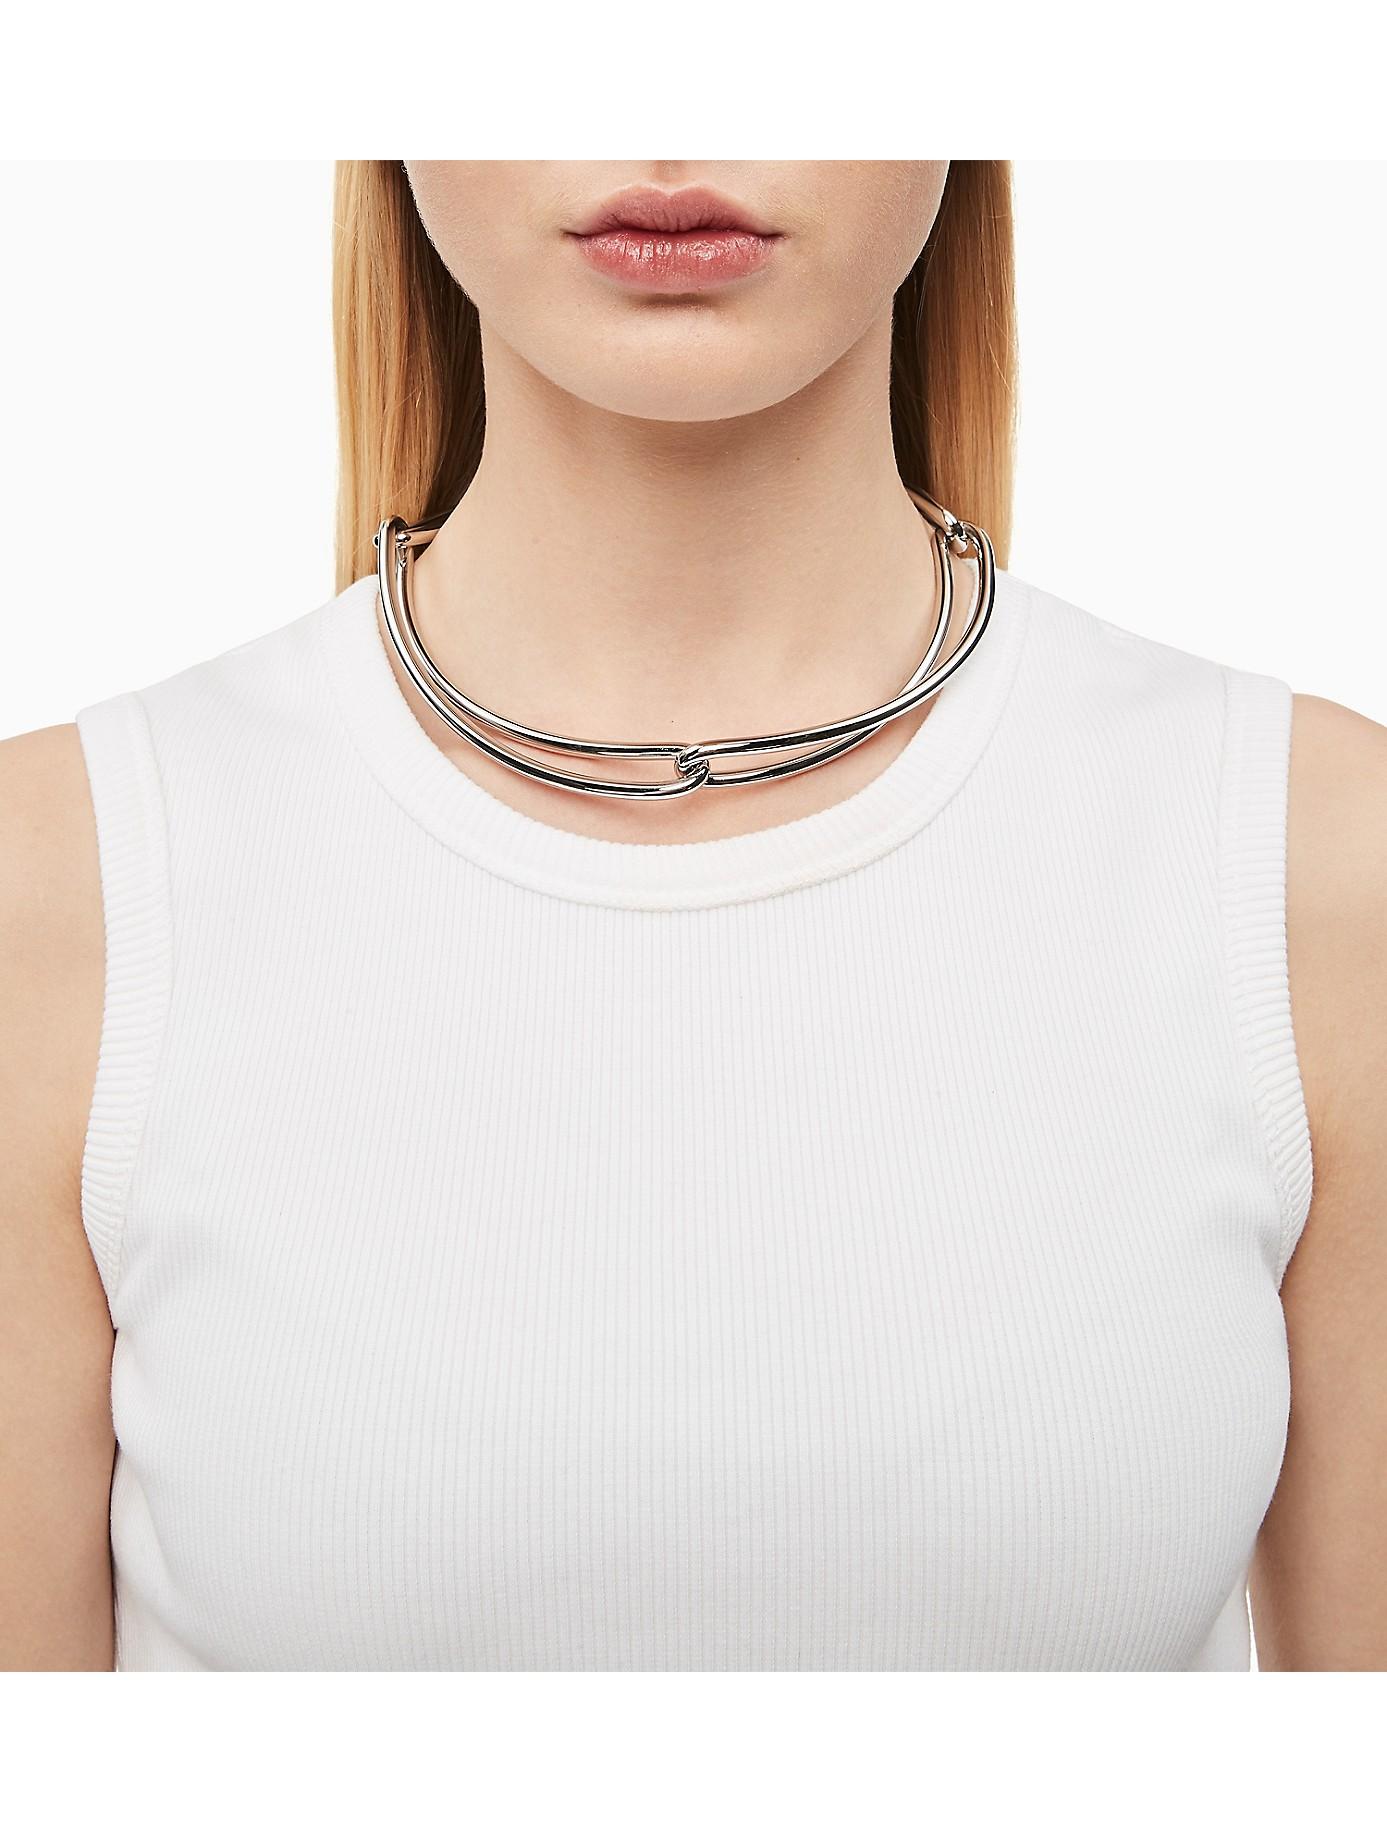 Calvin Klein Choker Necklace on Sale - www.vsvidyalaya.in 1691549932